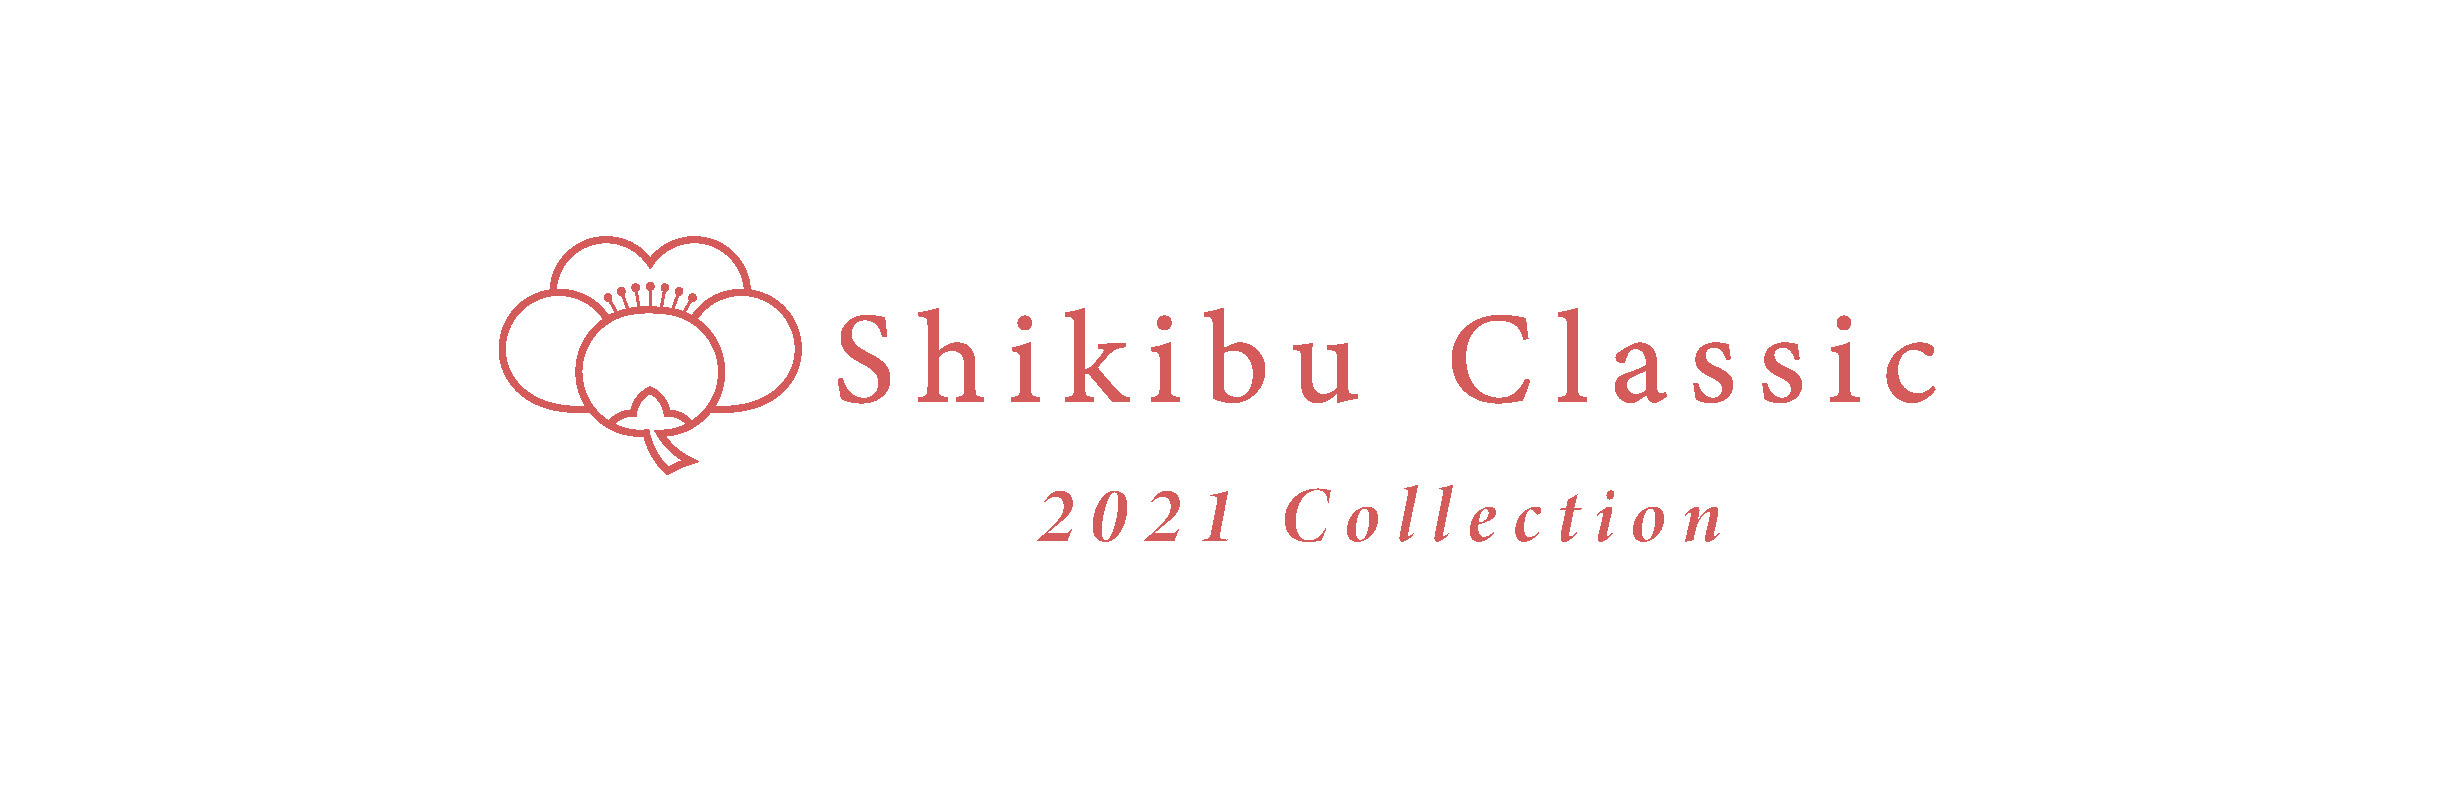 Shikibu Classic 2021